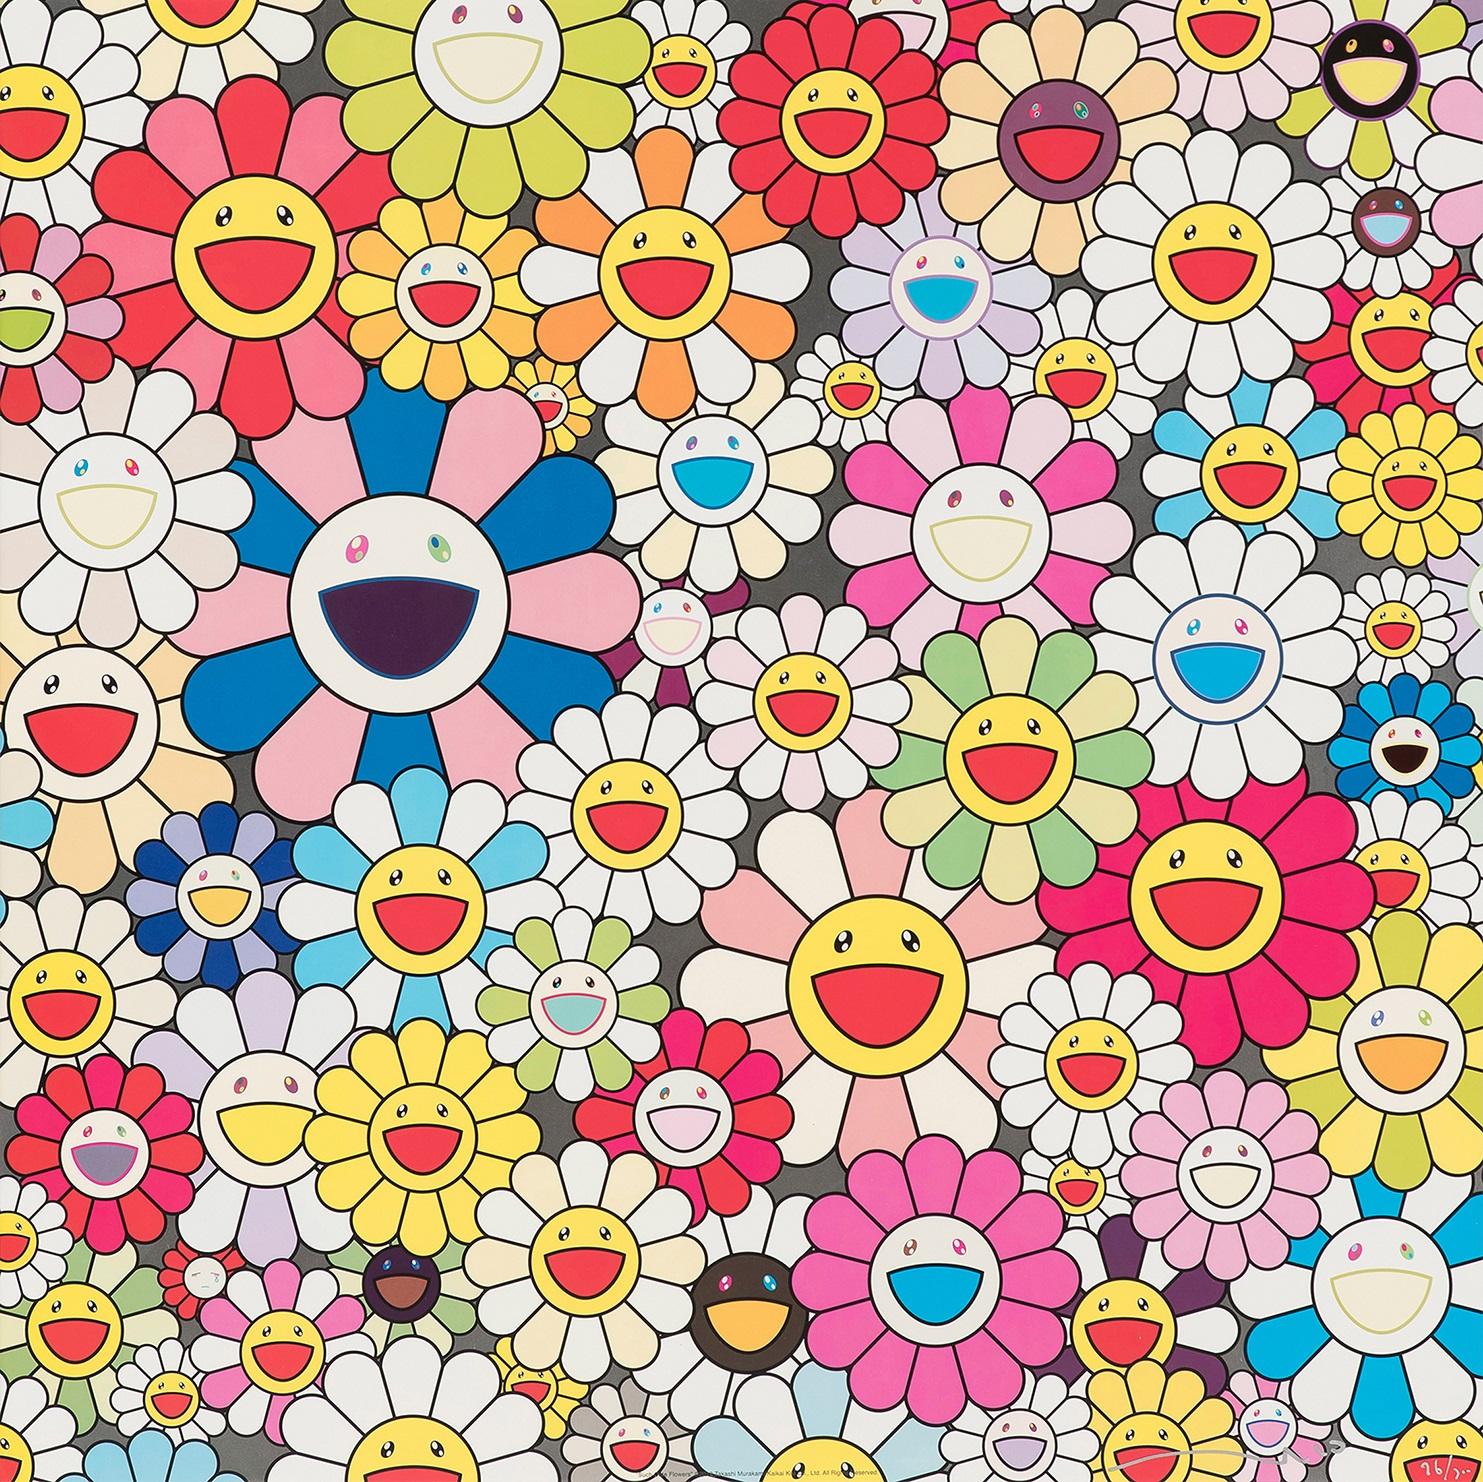 Figurative Print Takashi Murakami - Des fleurs aussi taillées. Édition limitée (impression) signée Murakami